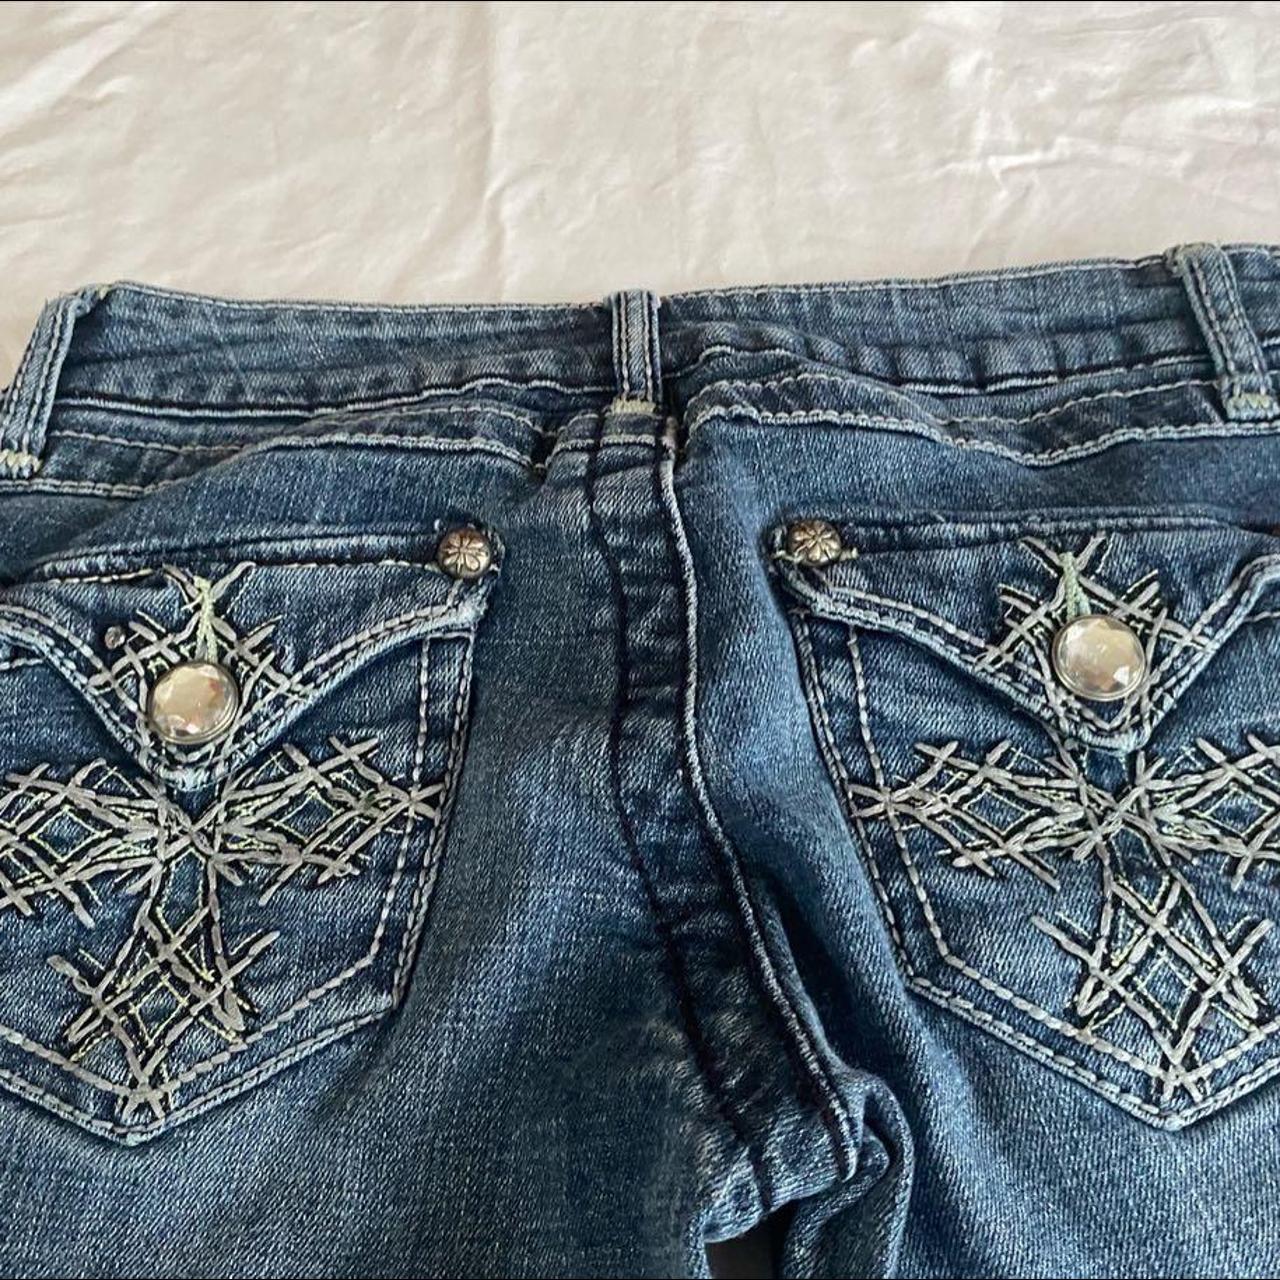 Super cute bedazzled cross pocket Bongo jeans, so so... - Depop